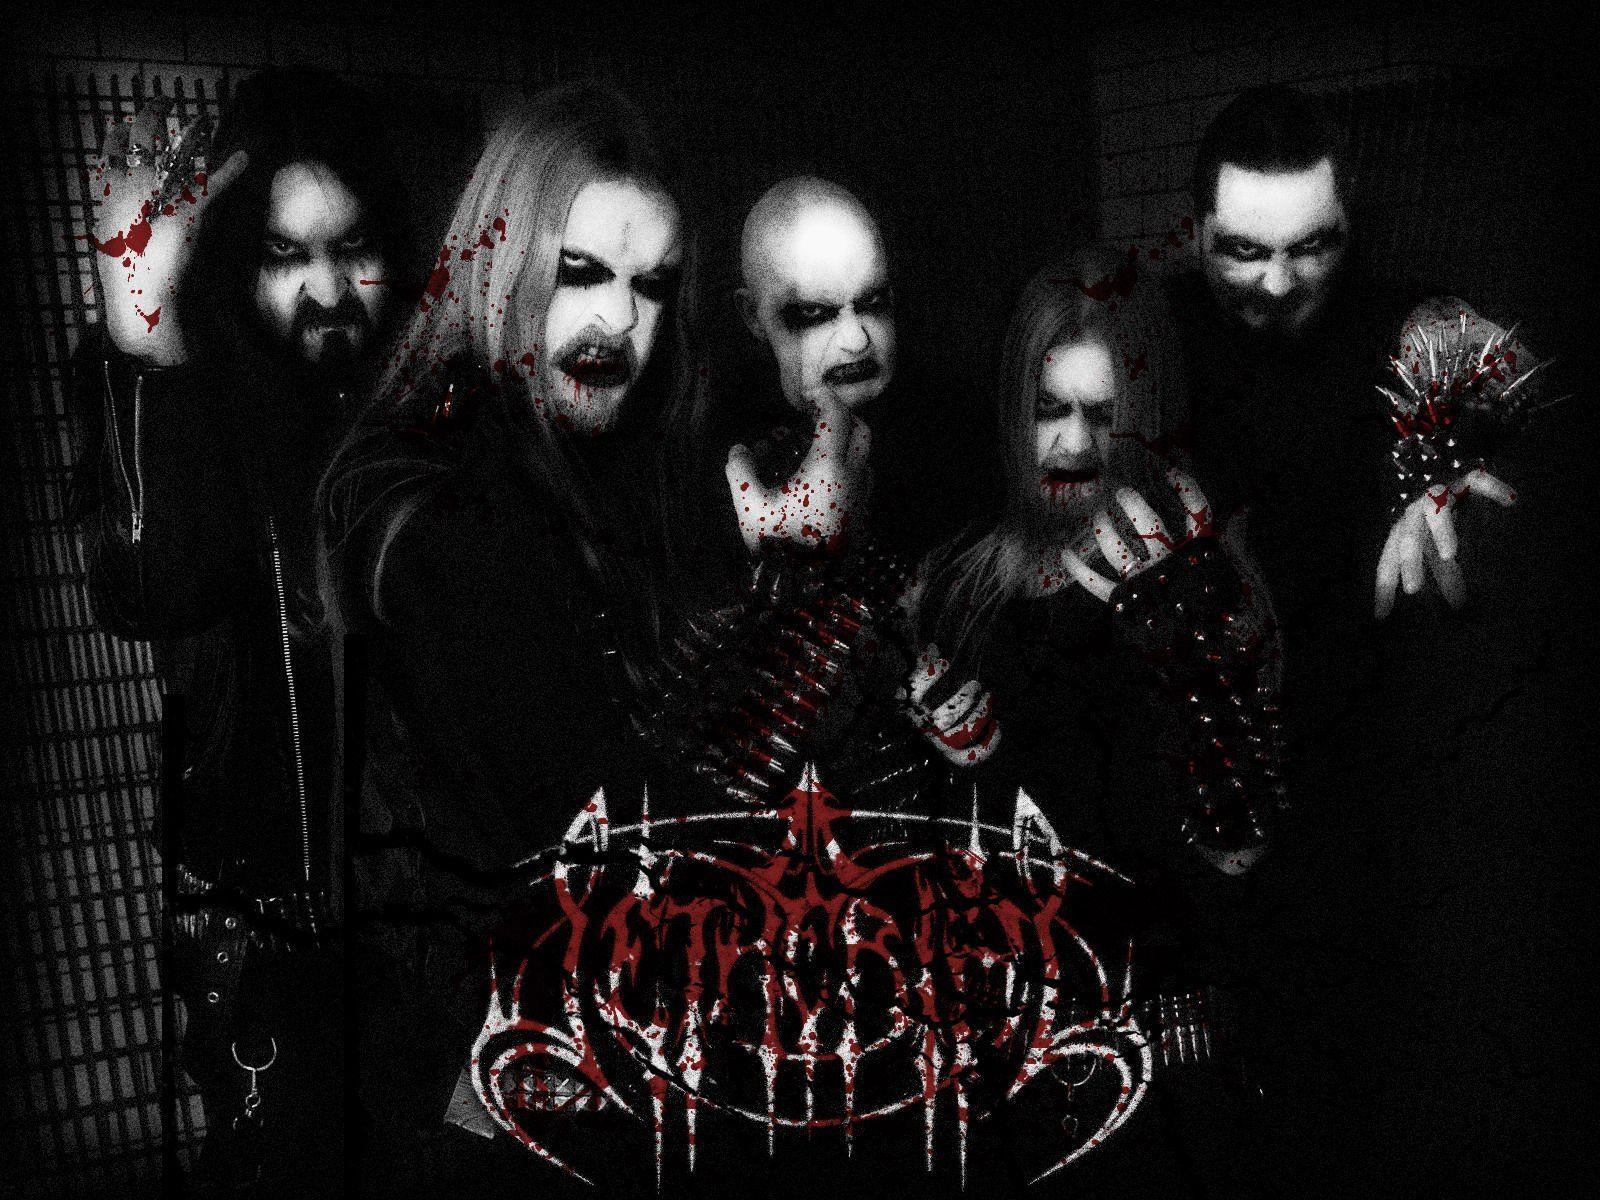 Black Metal группа xwmcndjsjjdjdjrjd.